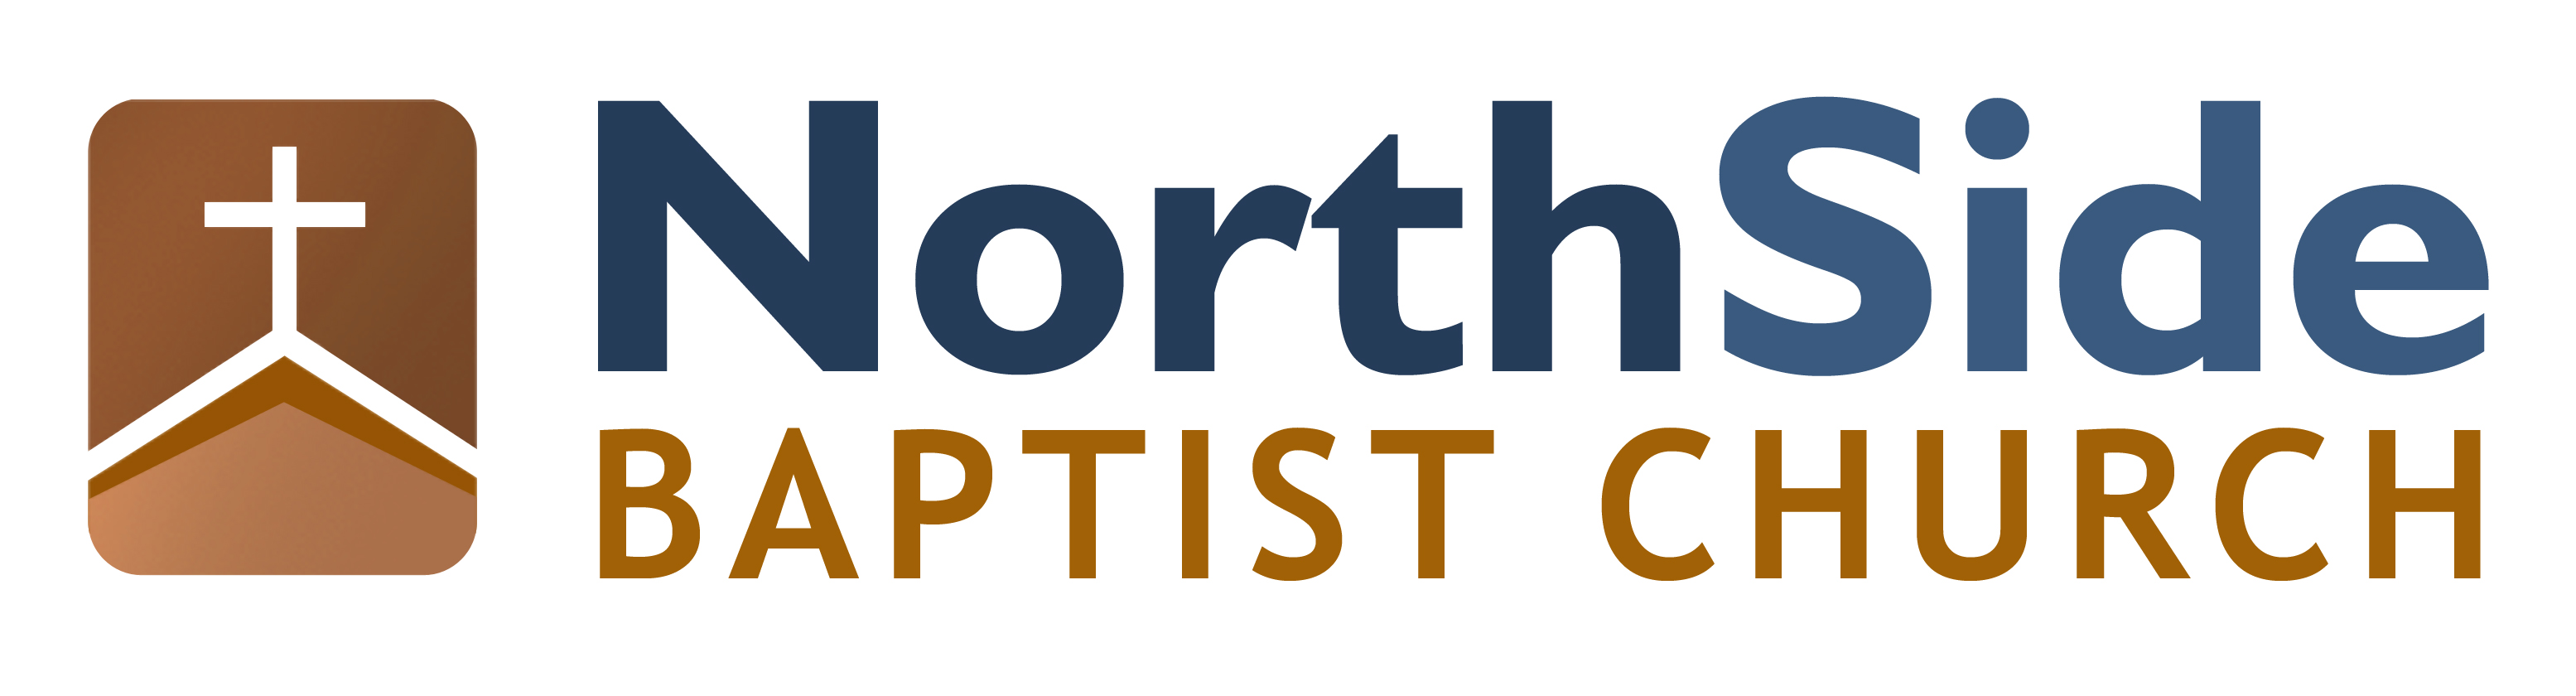 North Side Baptist Church logo